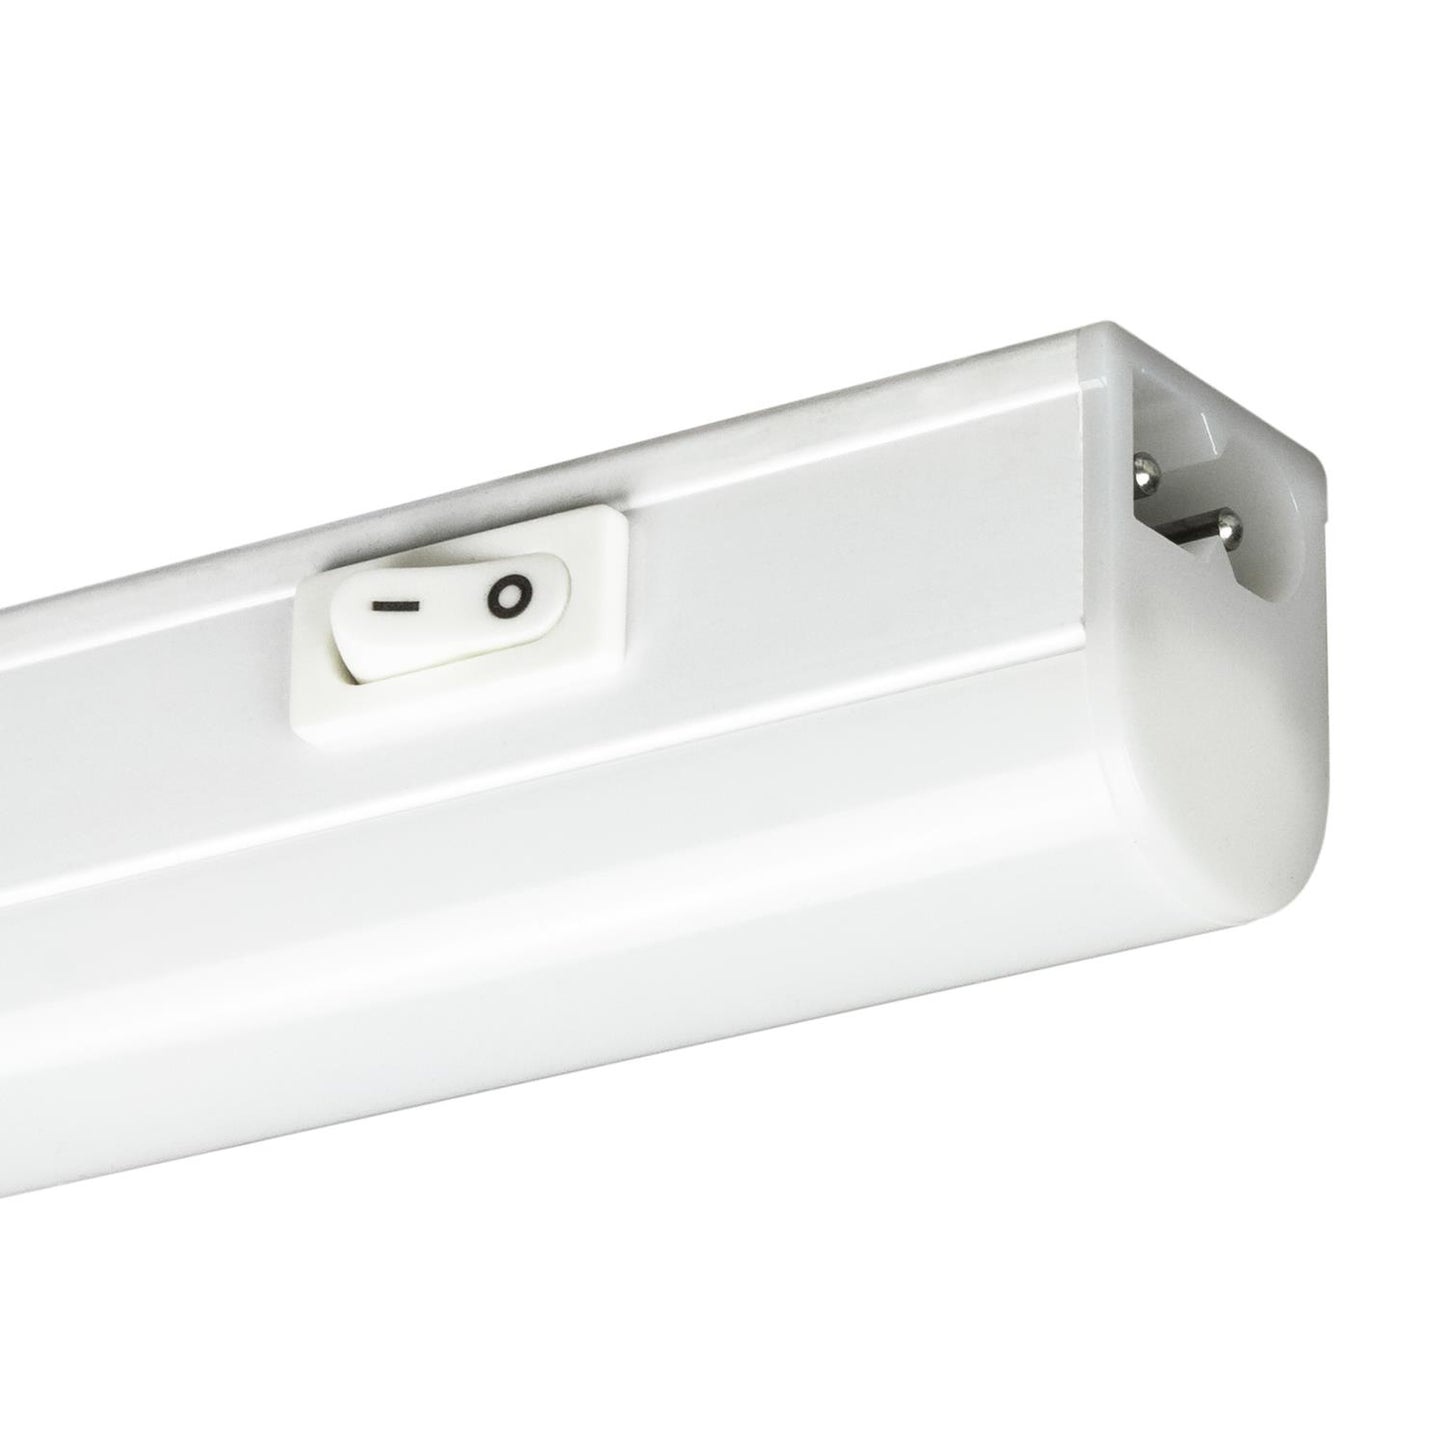 Sunlite 22" 8 Watt 120 Volt LED Linkable Under Cabinet Fixture, White Finish, With Plug